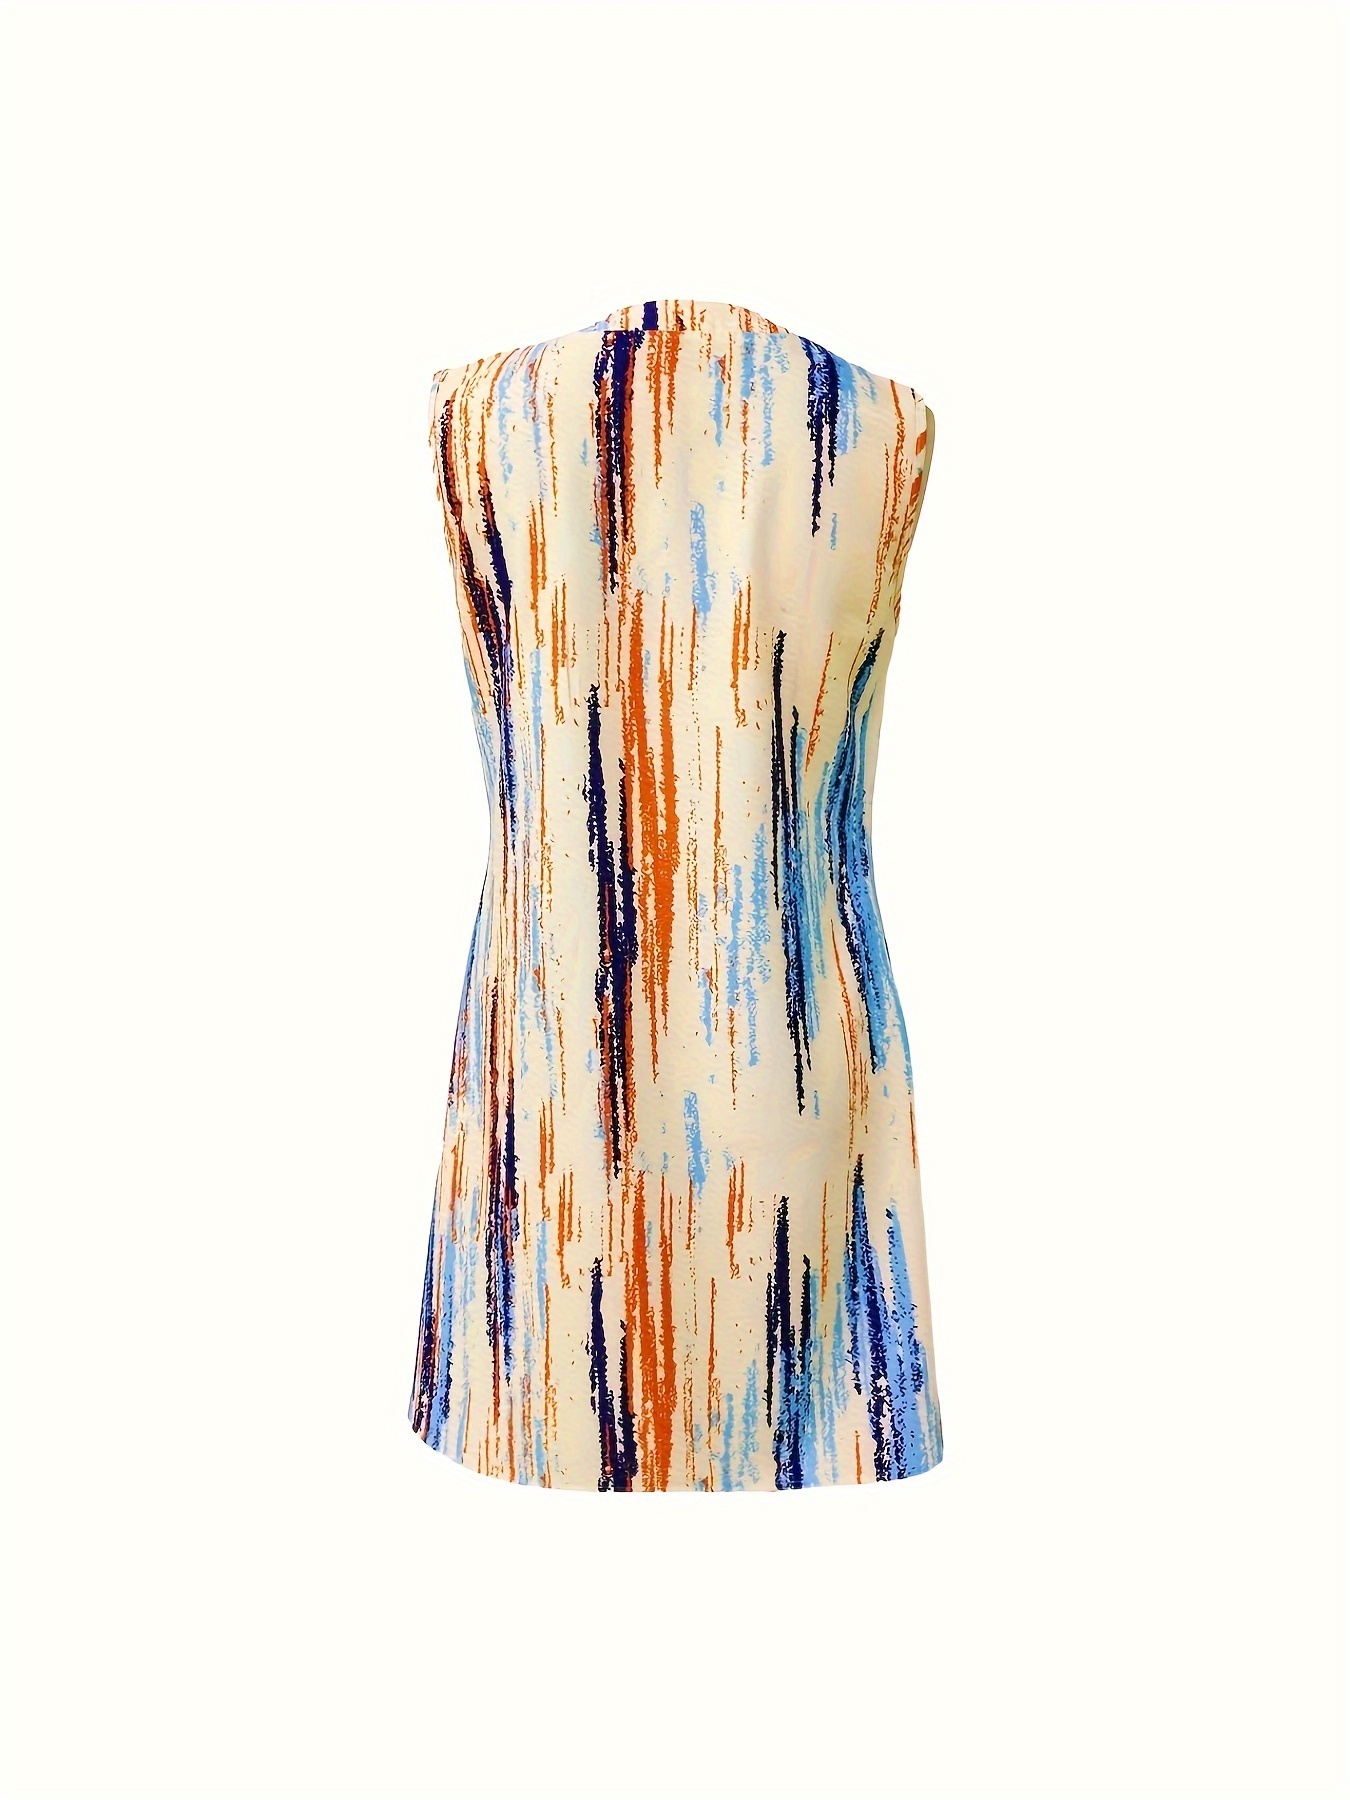 abstract ripple print dress casual v neck sleeveless dress womens clothing details 31